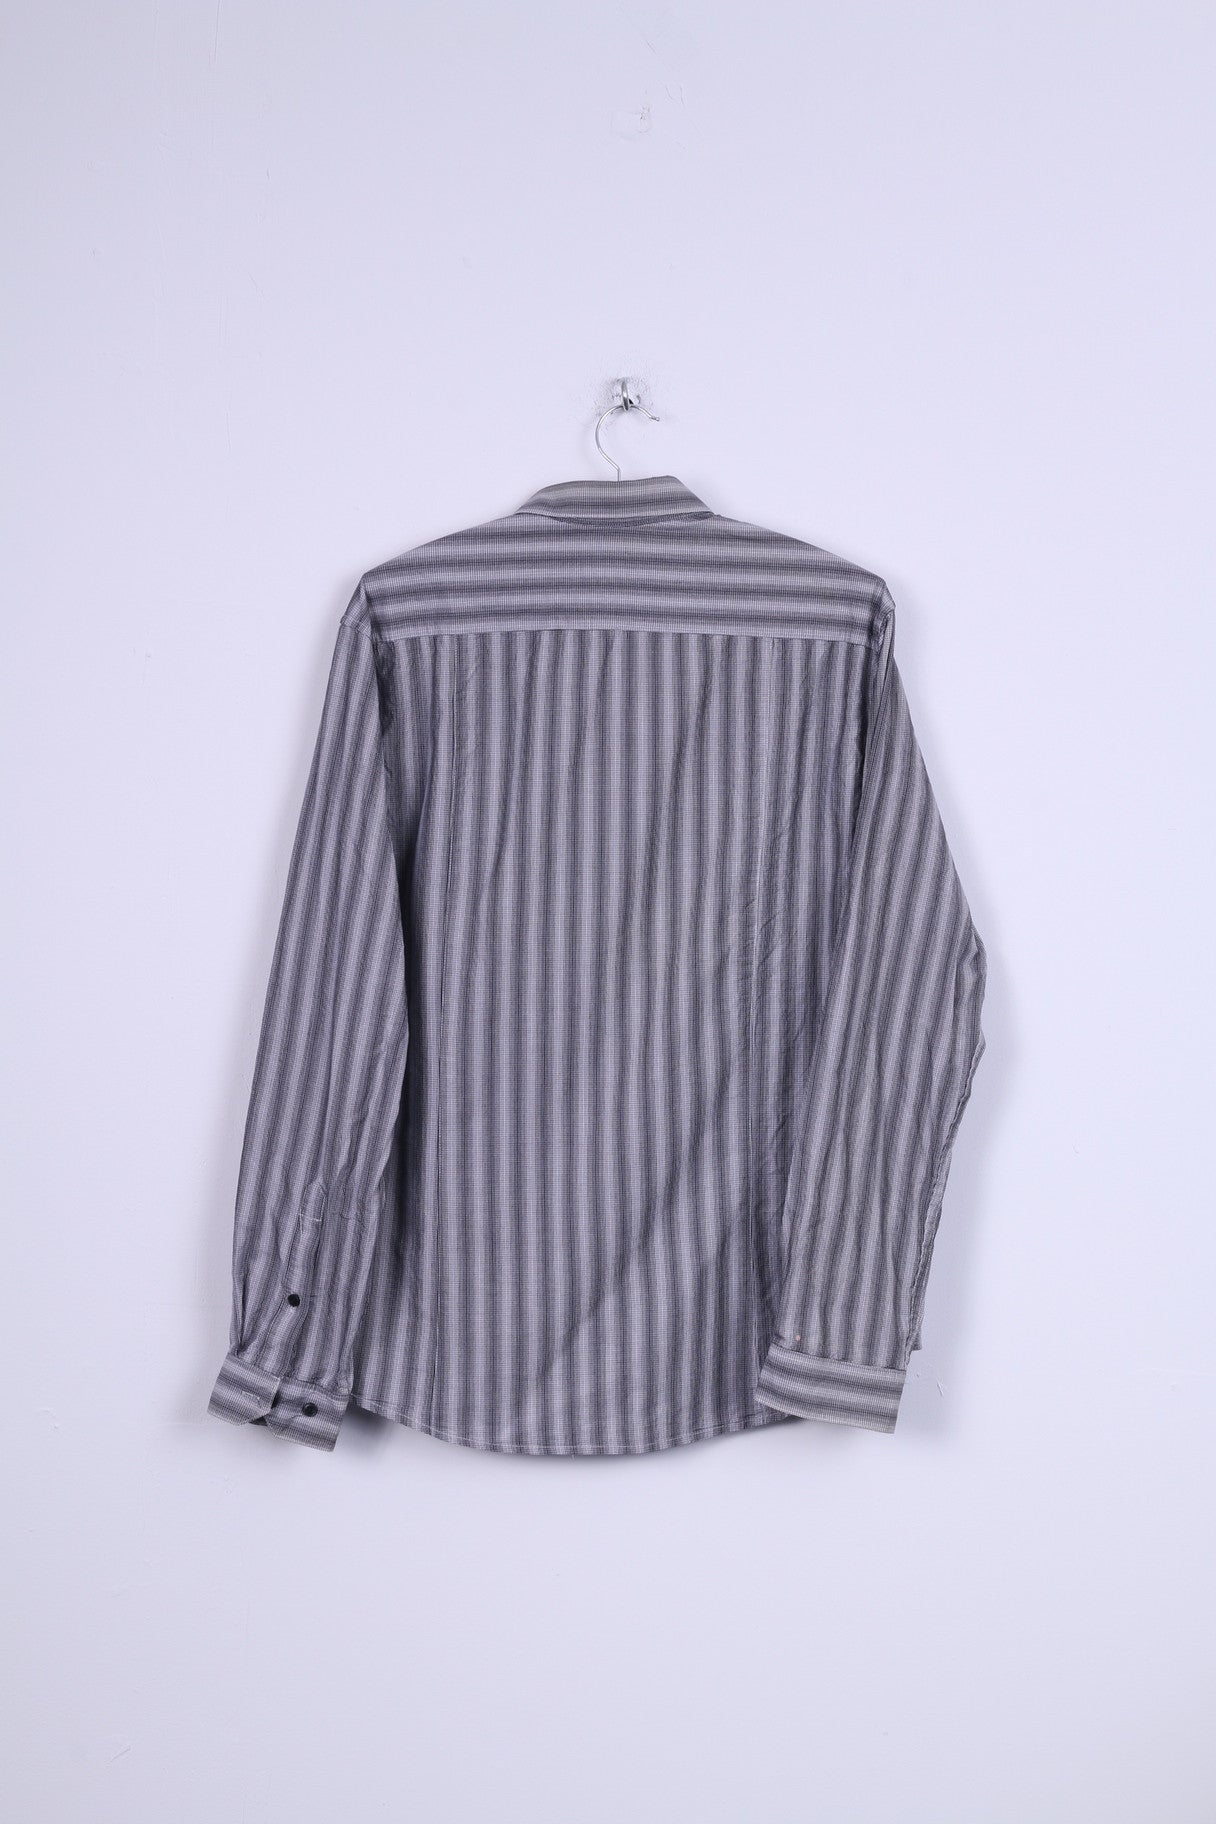 Camicia casual H&amp;M da uomo L (M) a maniche lunghe in cotone a righe bianche nere